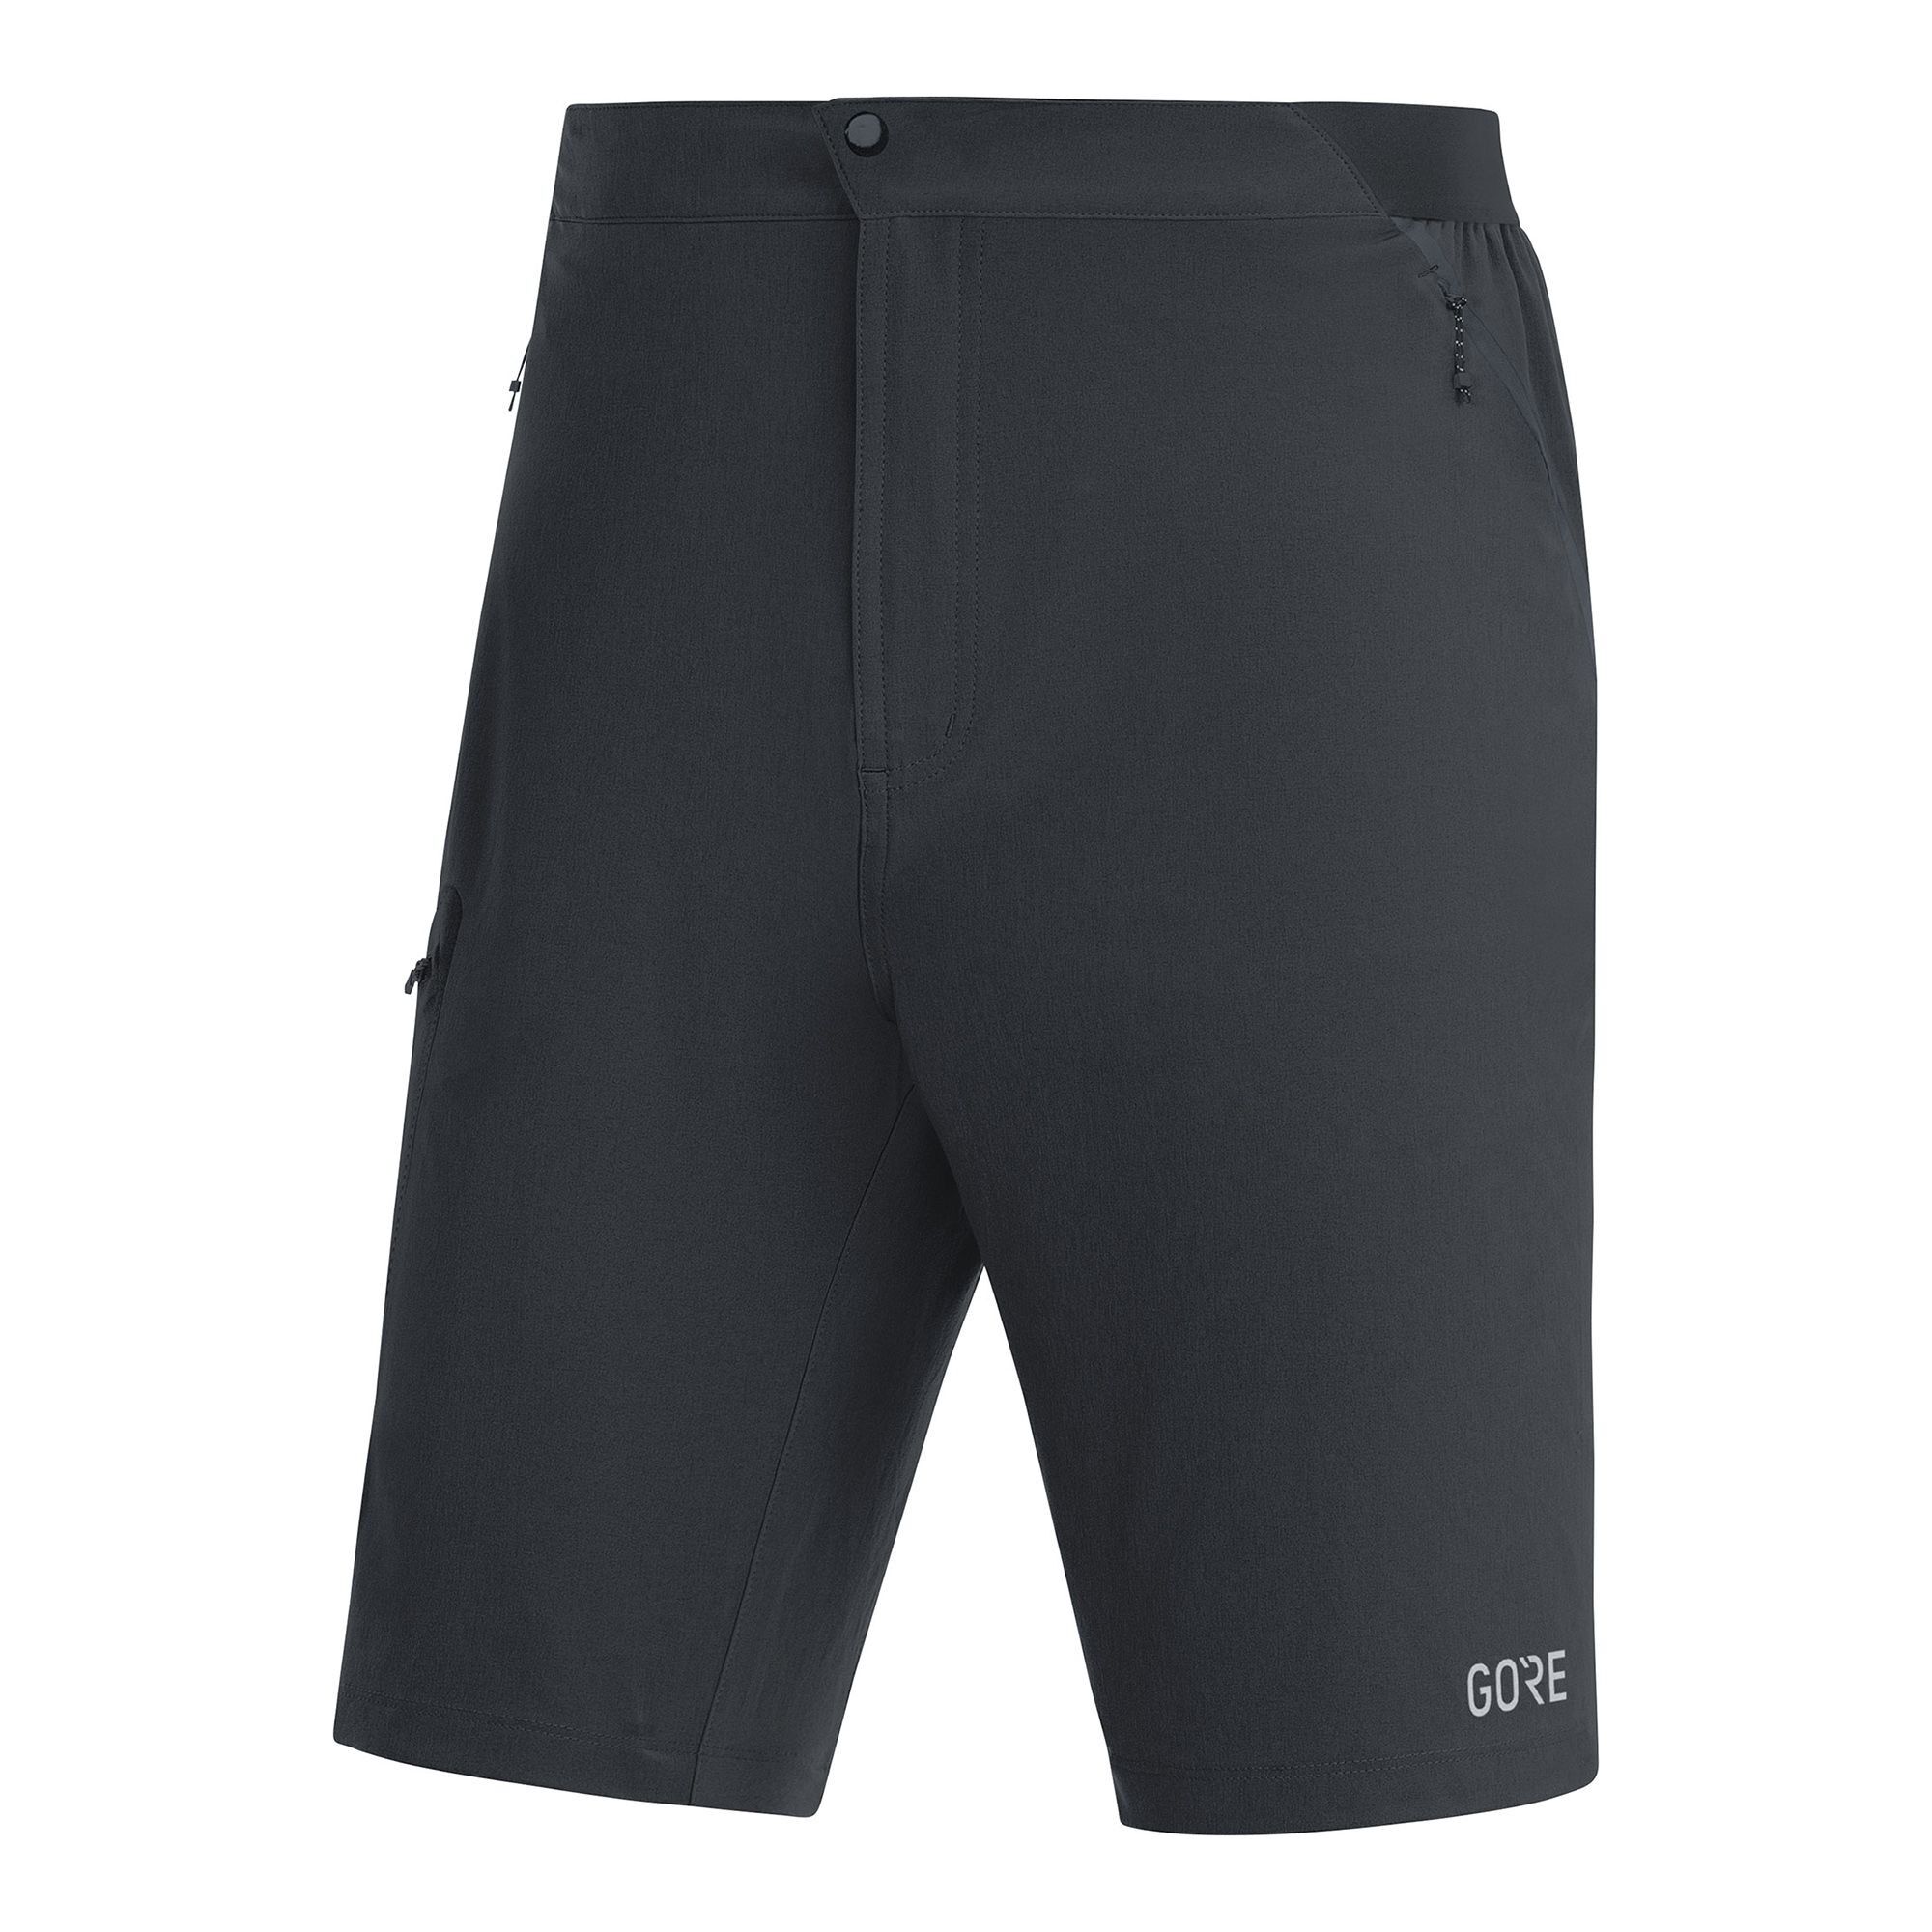 Gore Wear R5 Shorts - Running shorts - Men's